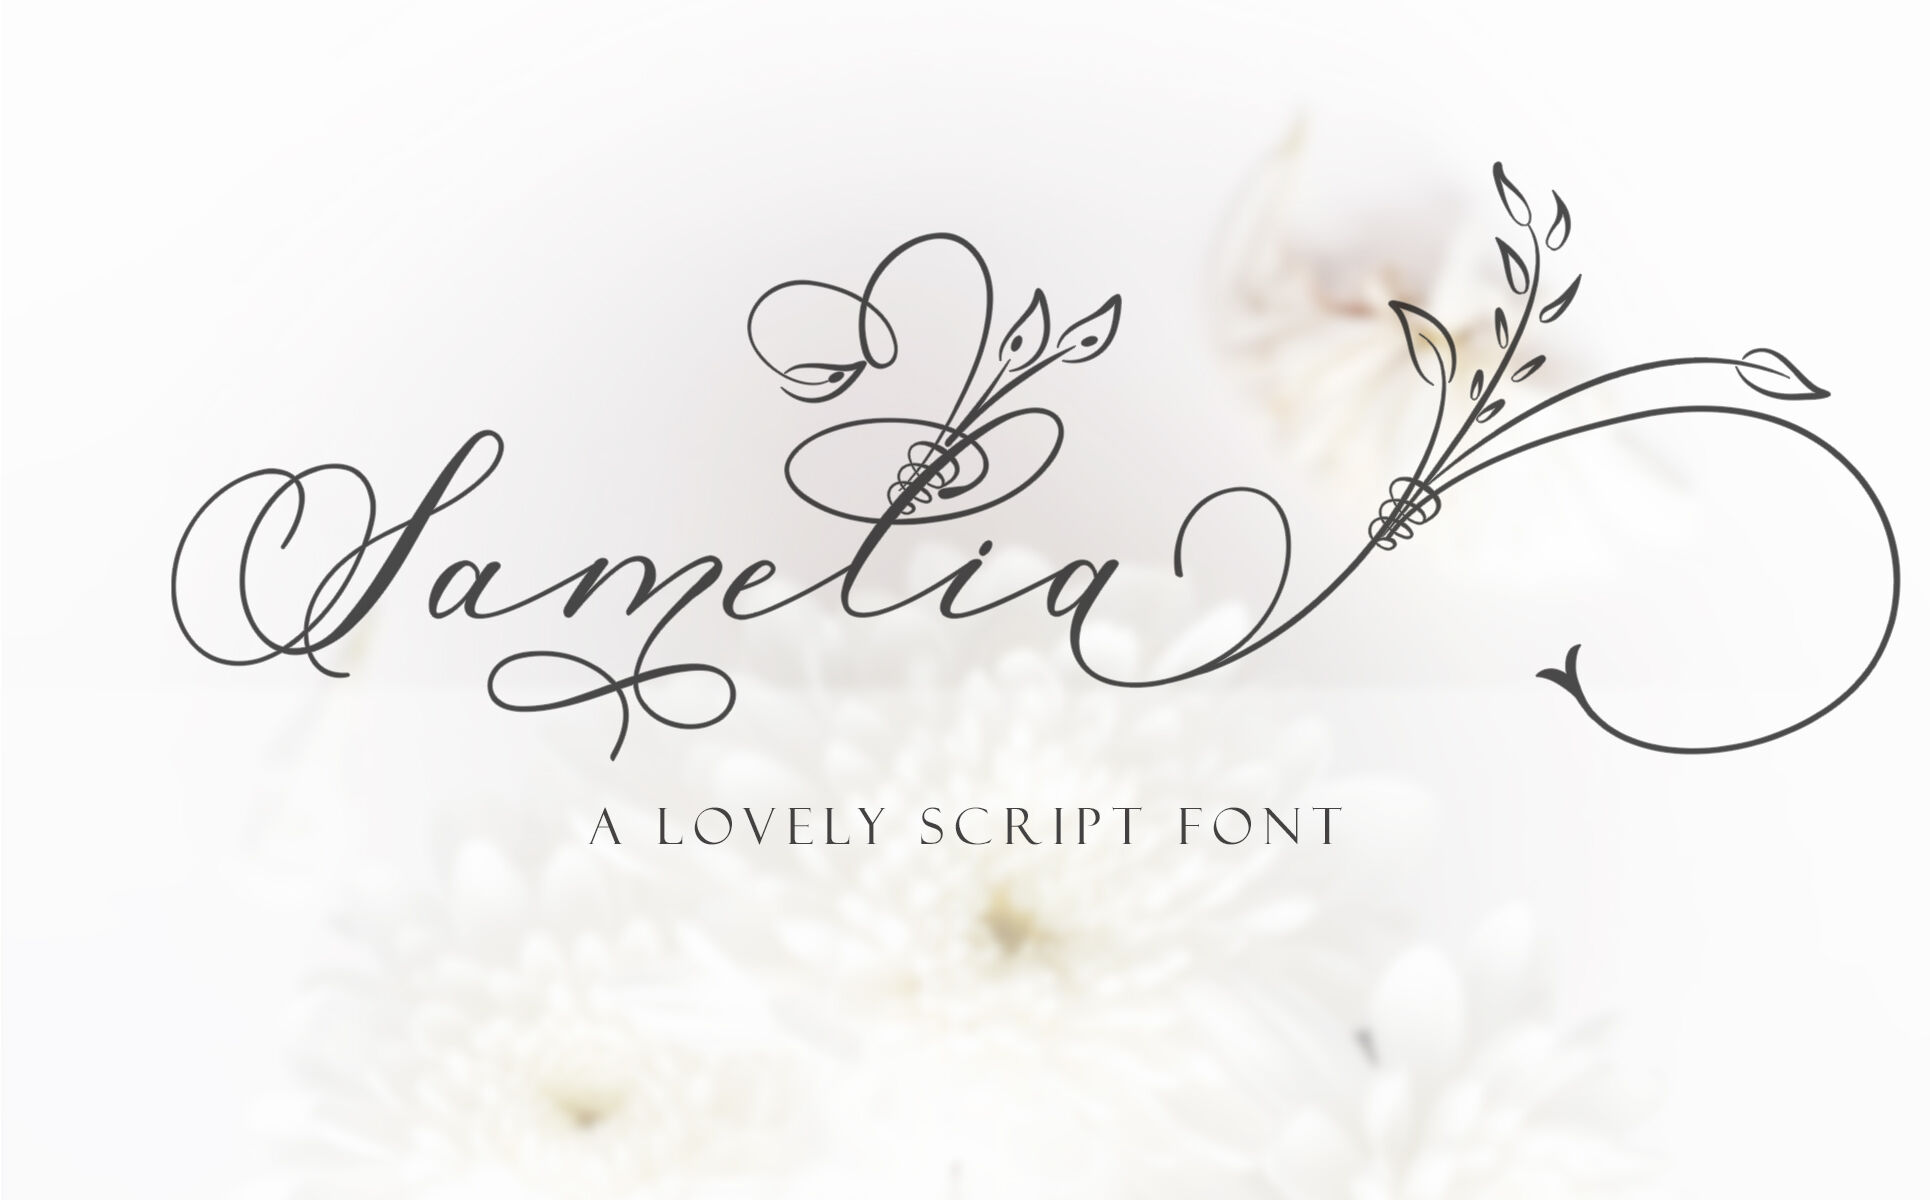 Samelia Lovely Script Font By Mdr Designs Thehungryjpeg Com